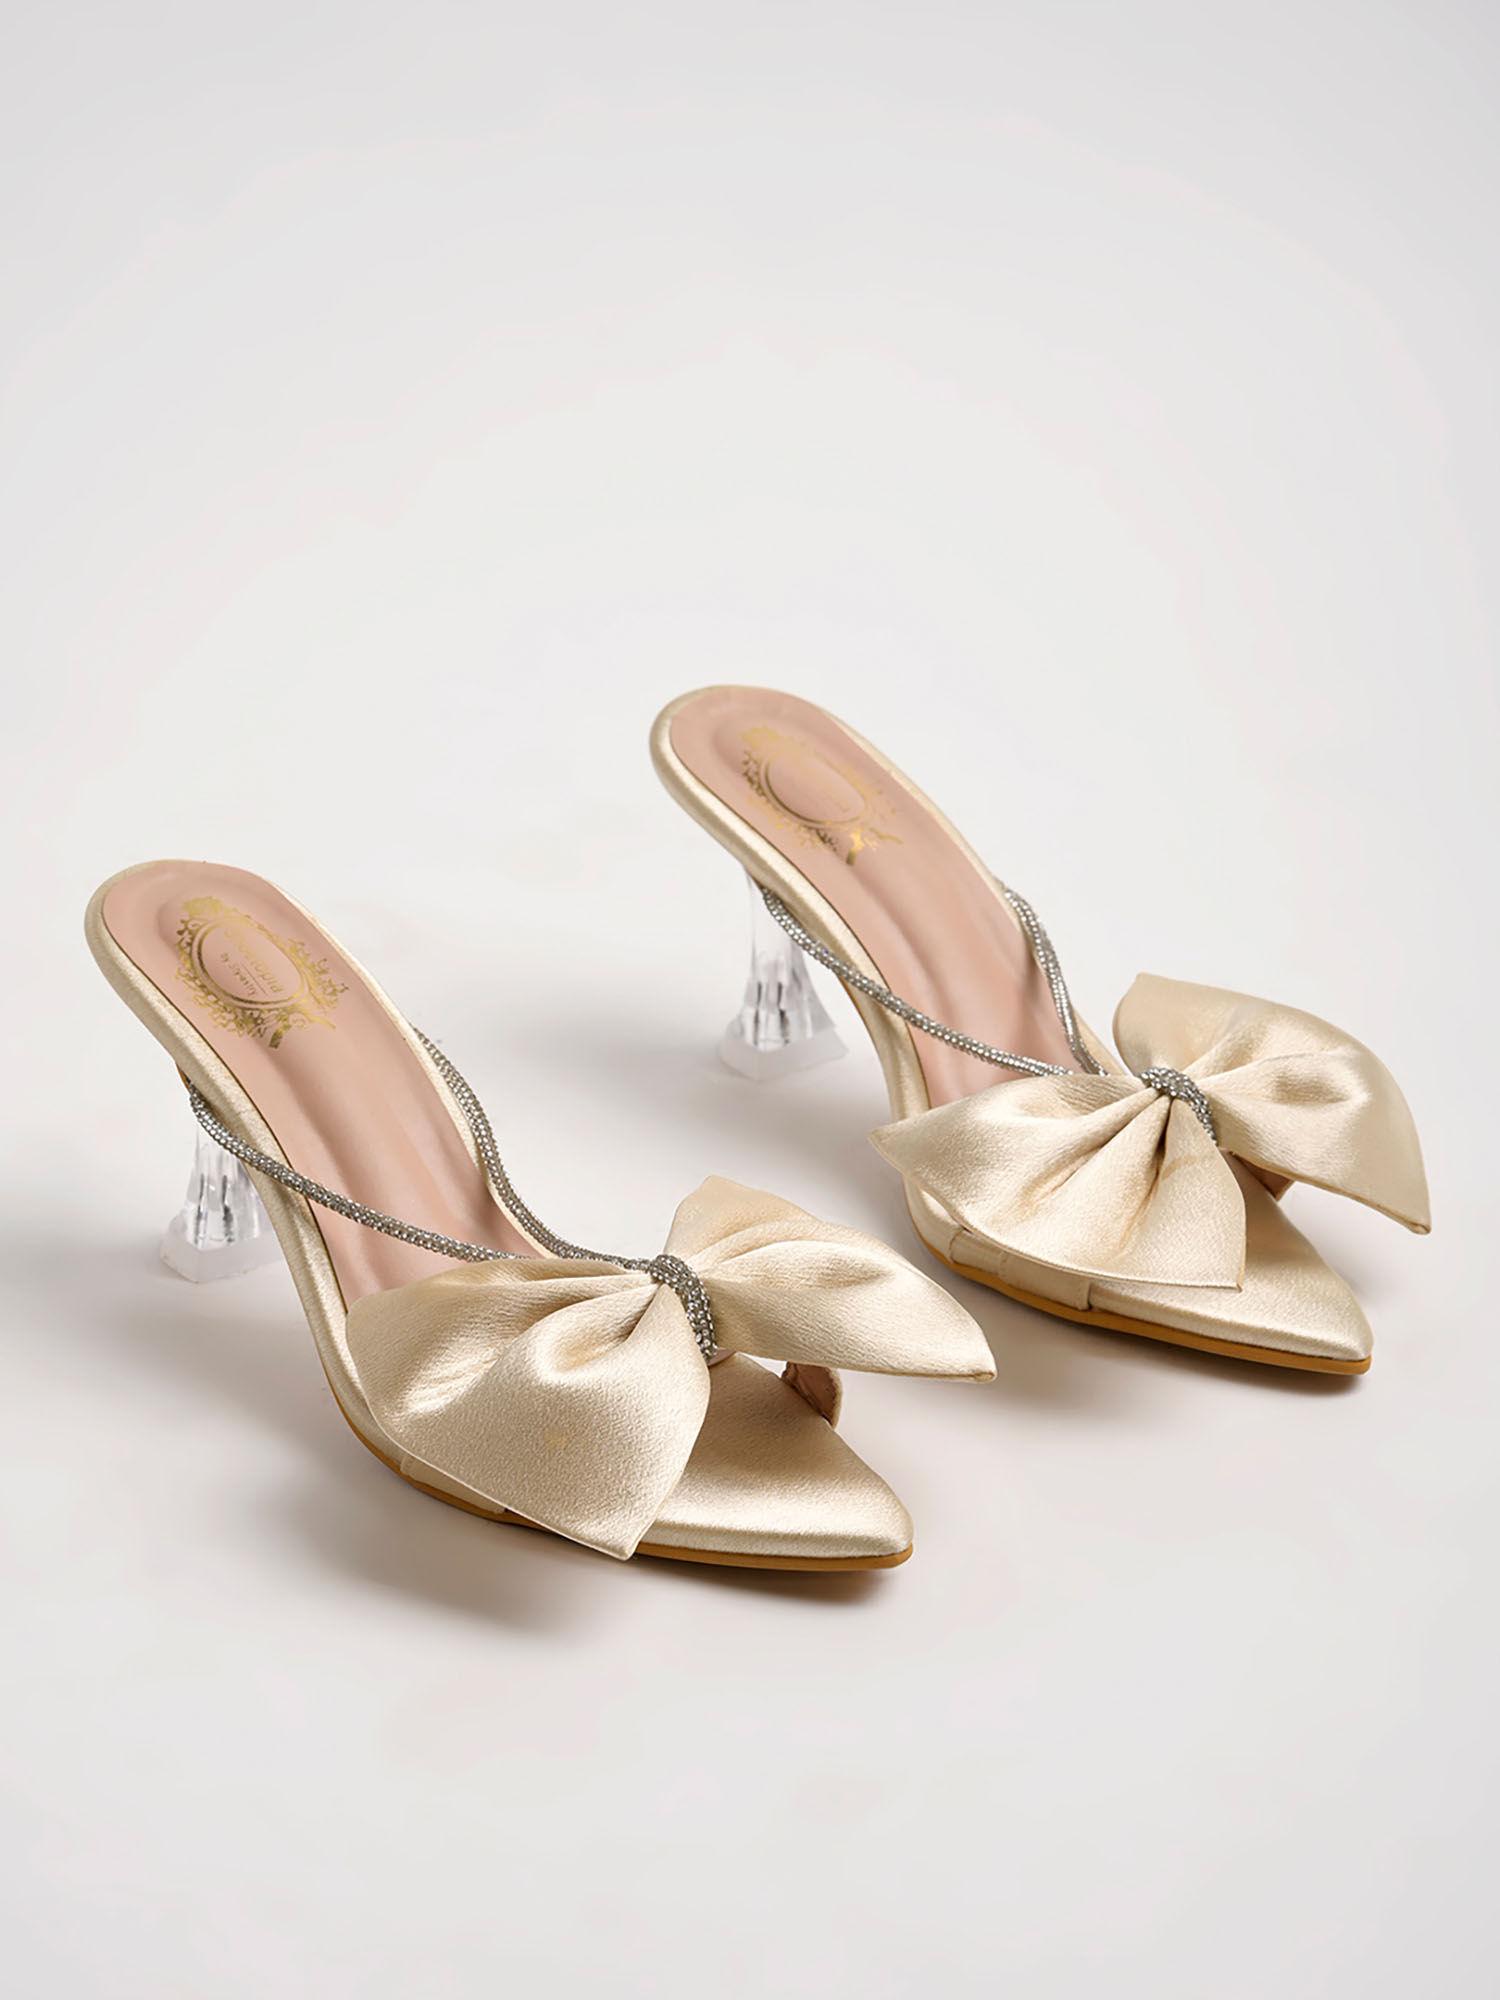 stylish western embellished golden heels for women & girls